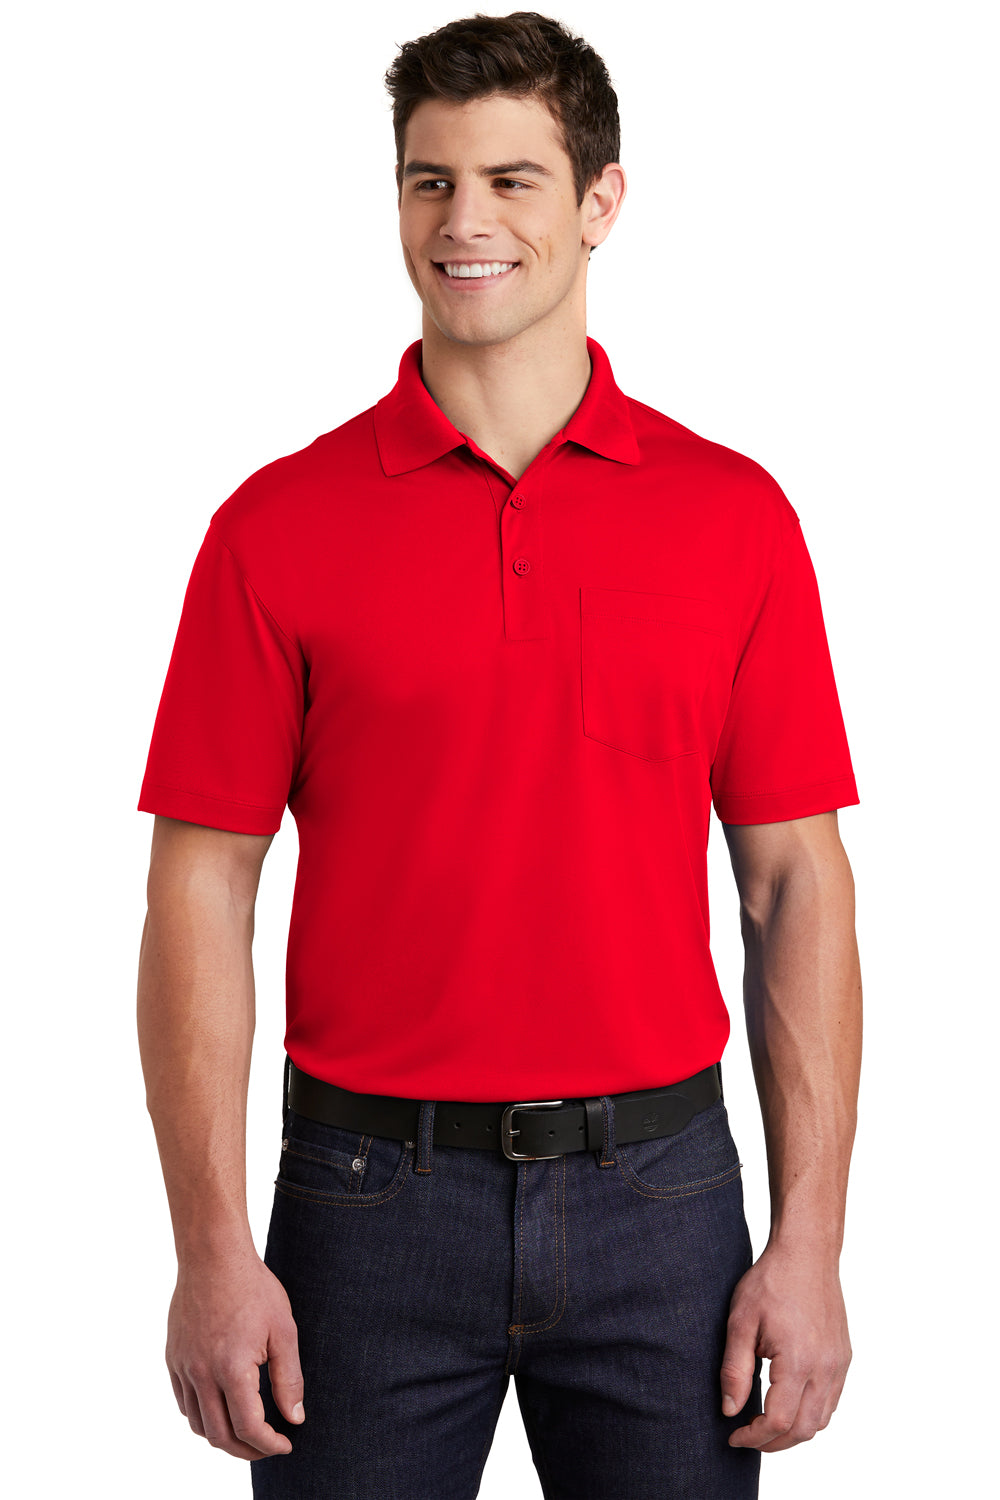 Sport-Tek ST651 Mens Sport-Wick Moisture Wicking Short Sleeve Polo Shirt w/ Pocket Red Front